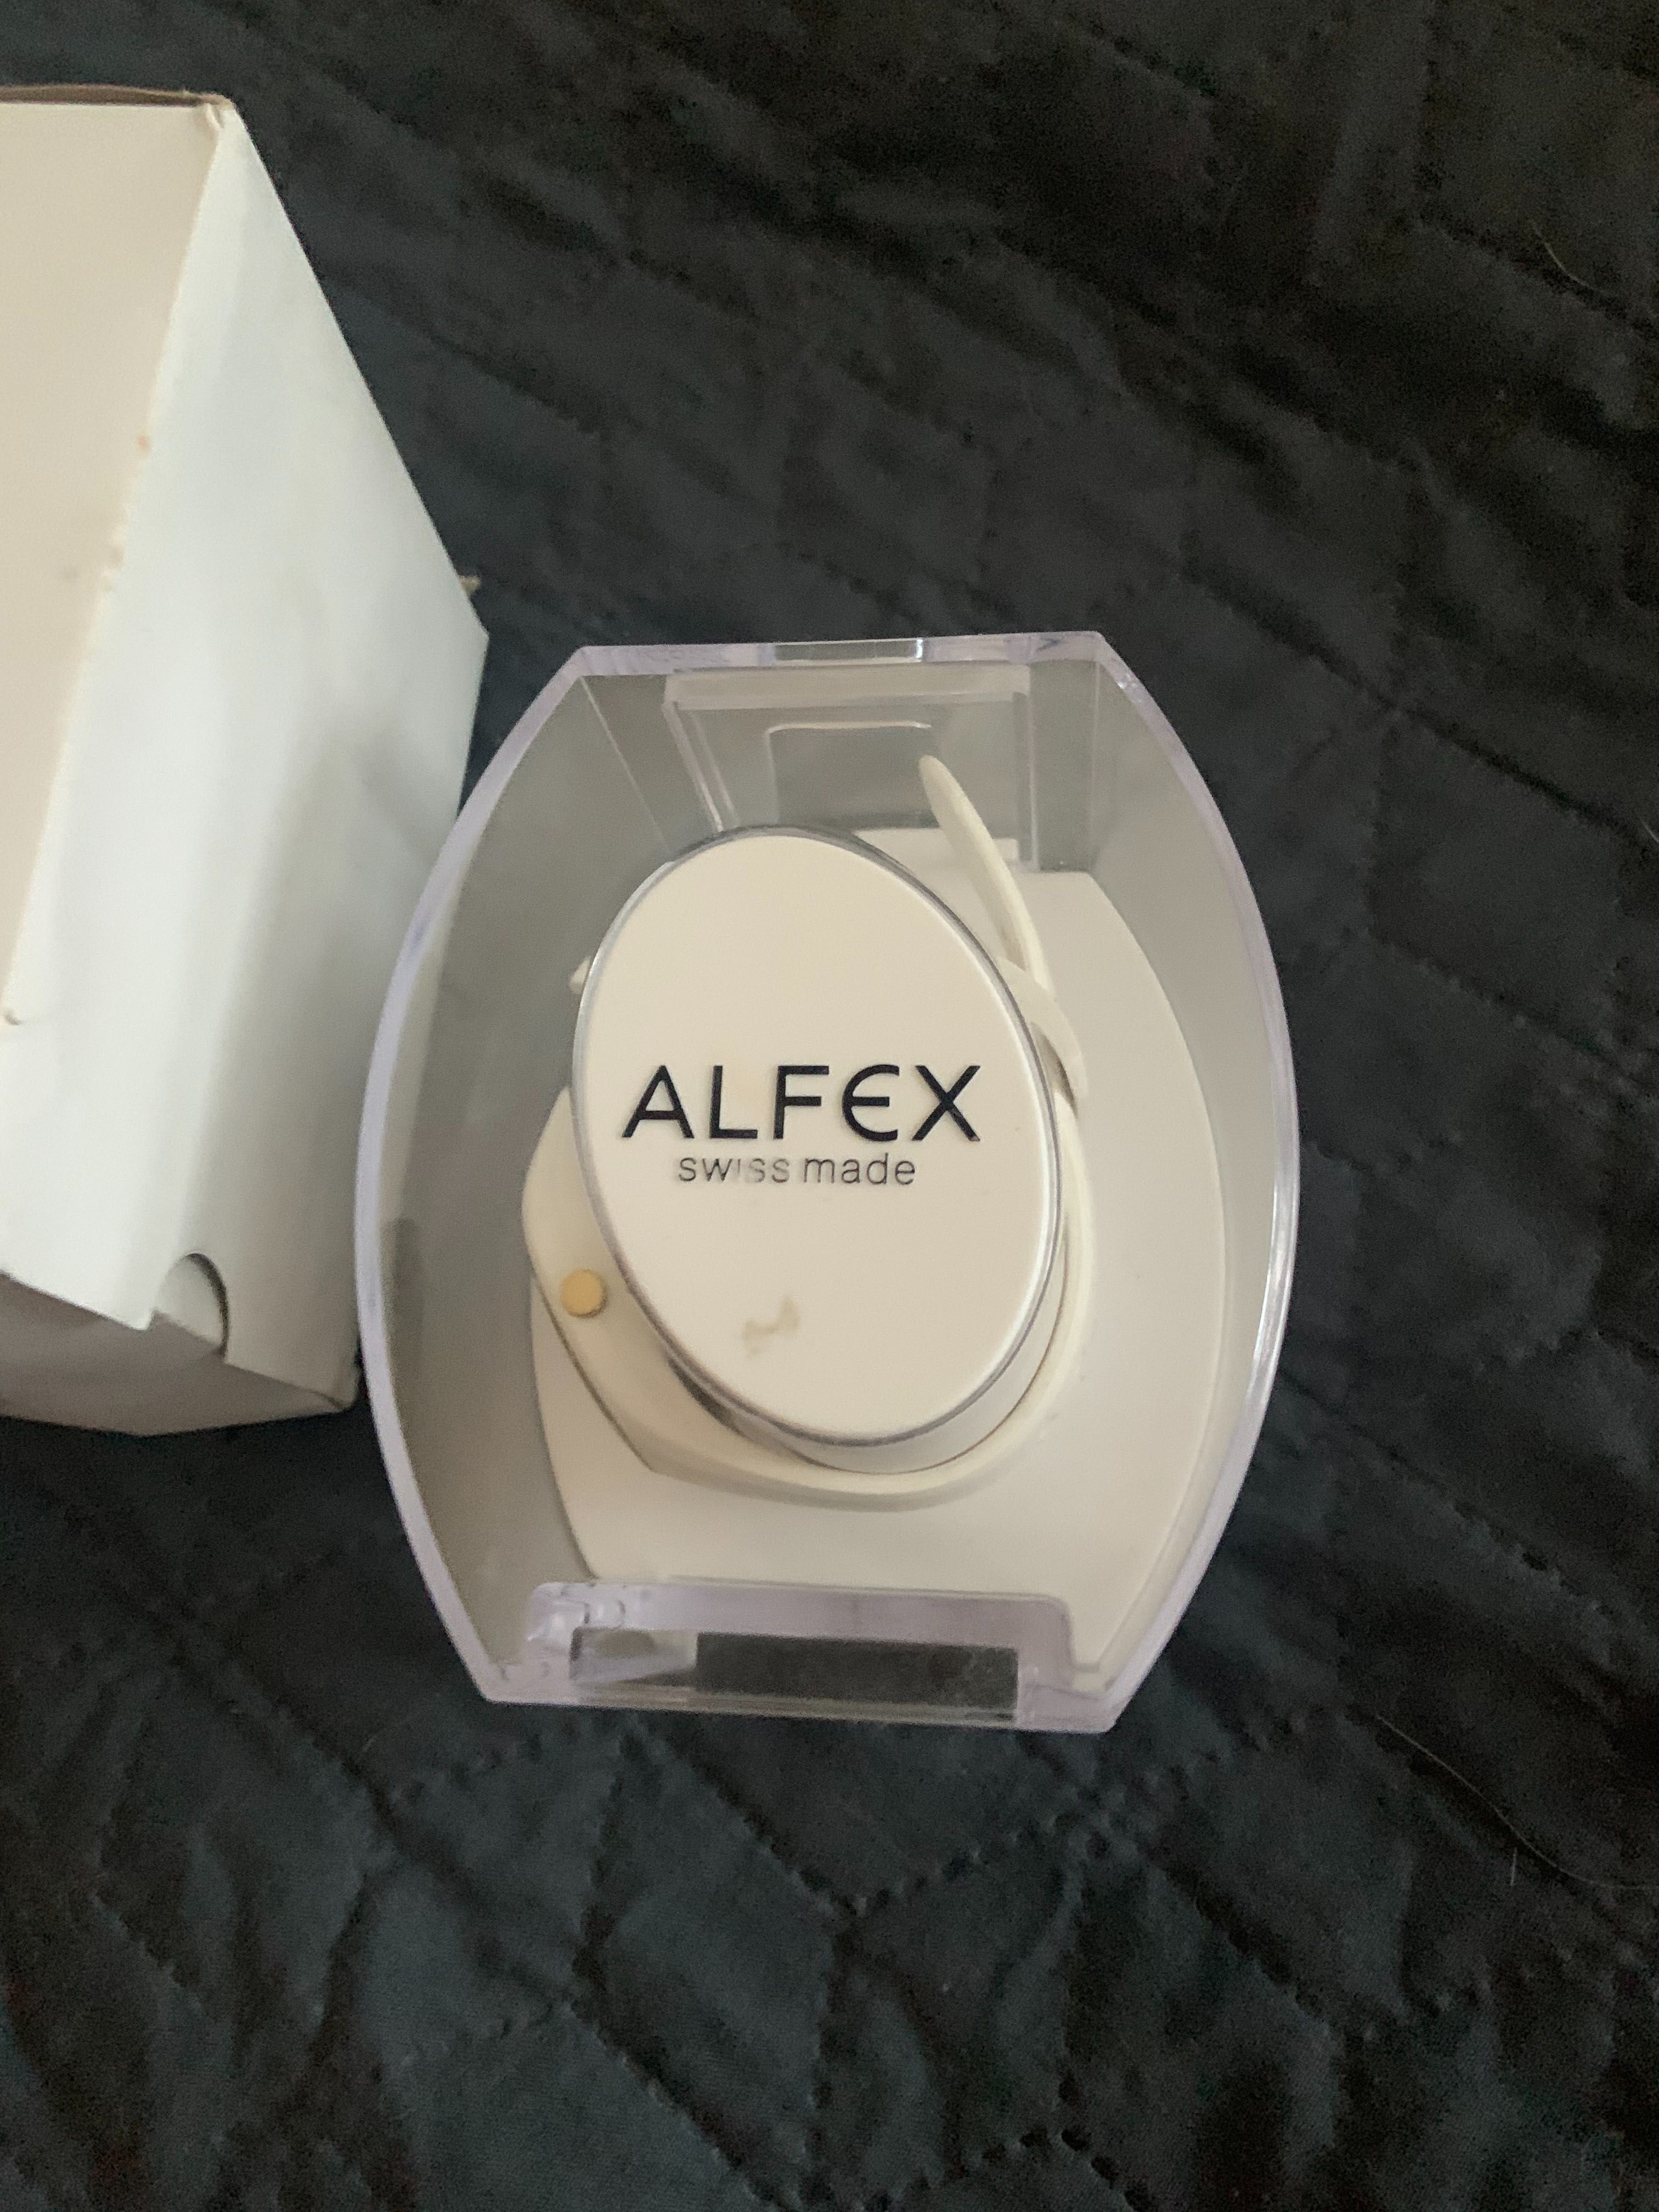 Швейцарские часы Alfex